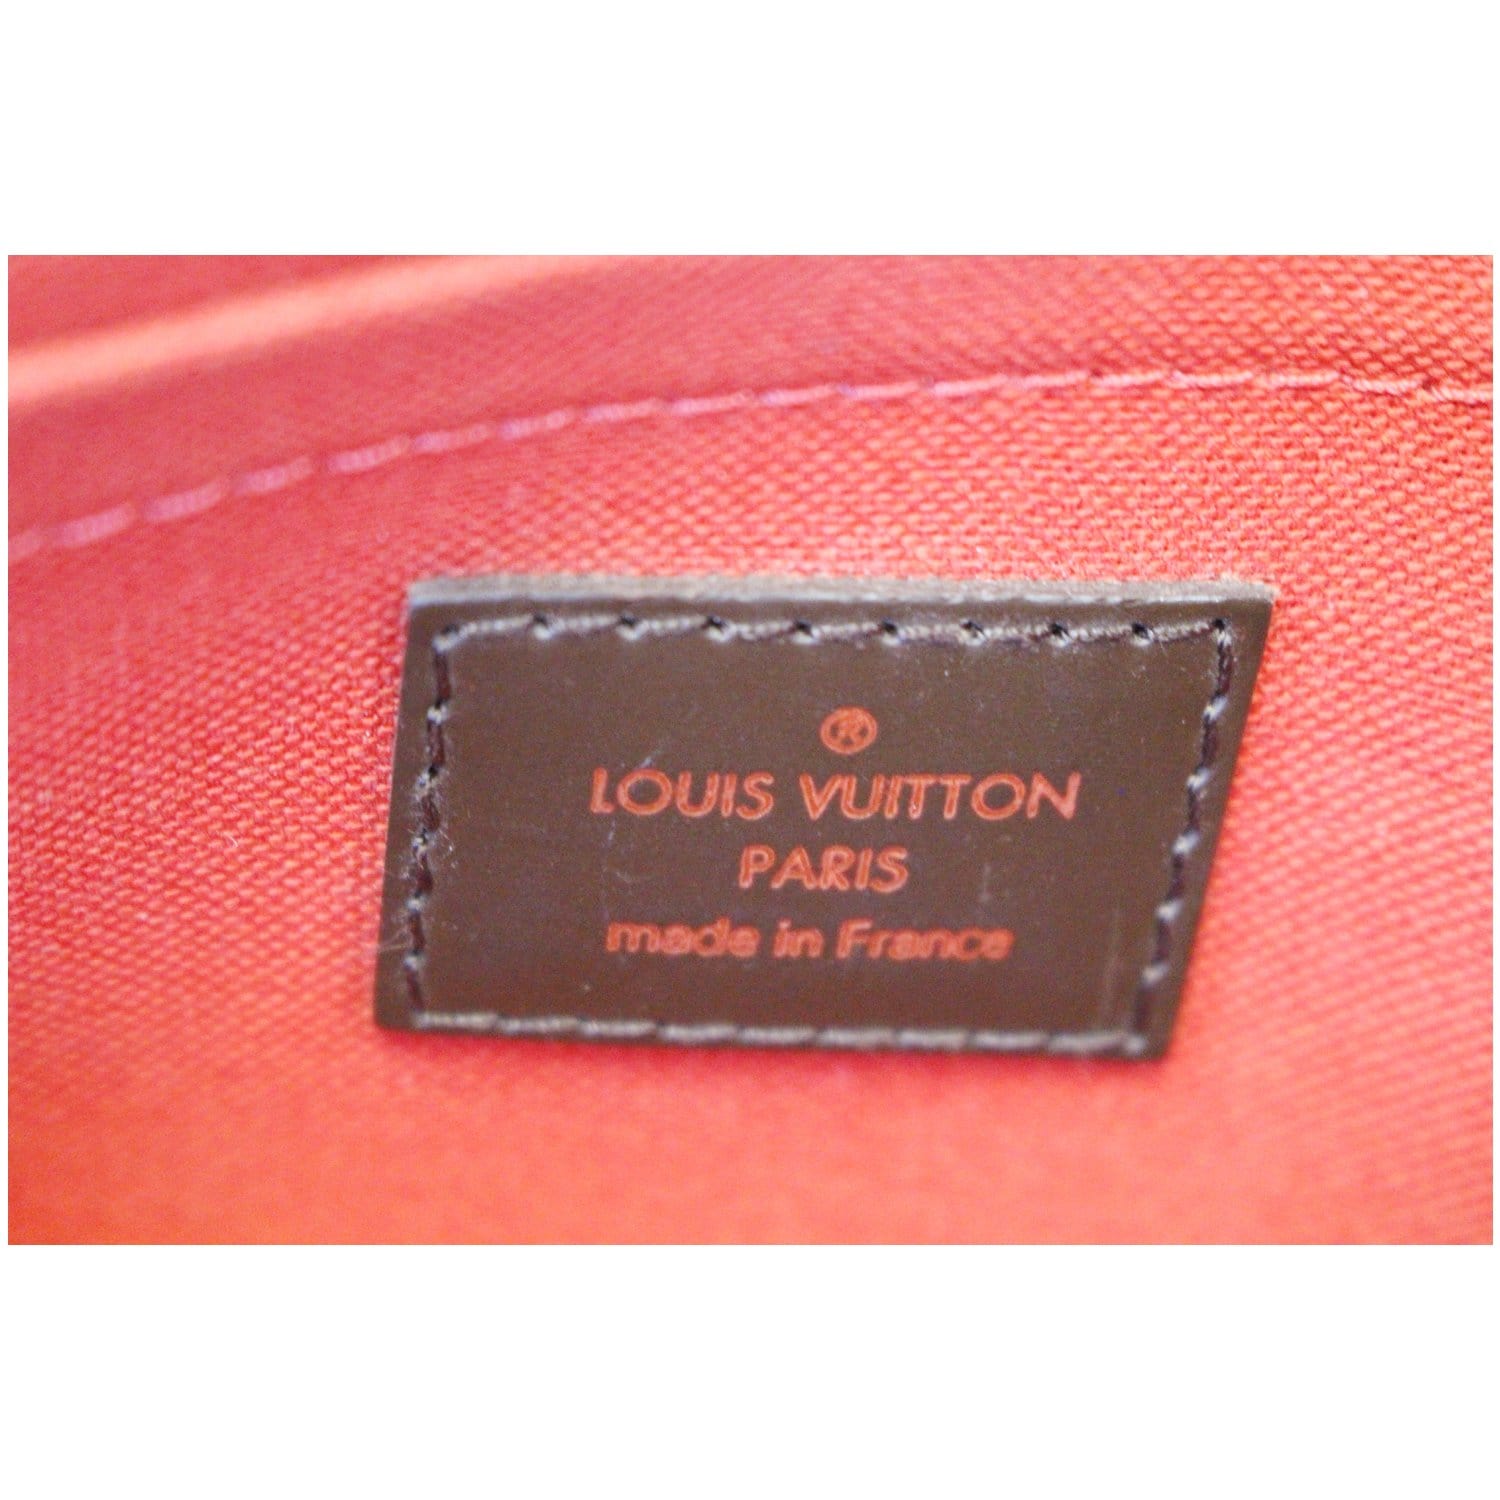 Damier Ebene Favorite PM Louis Vuitton, buy pre-owned at 700 EUR